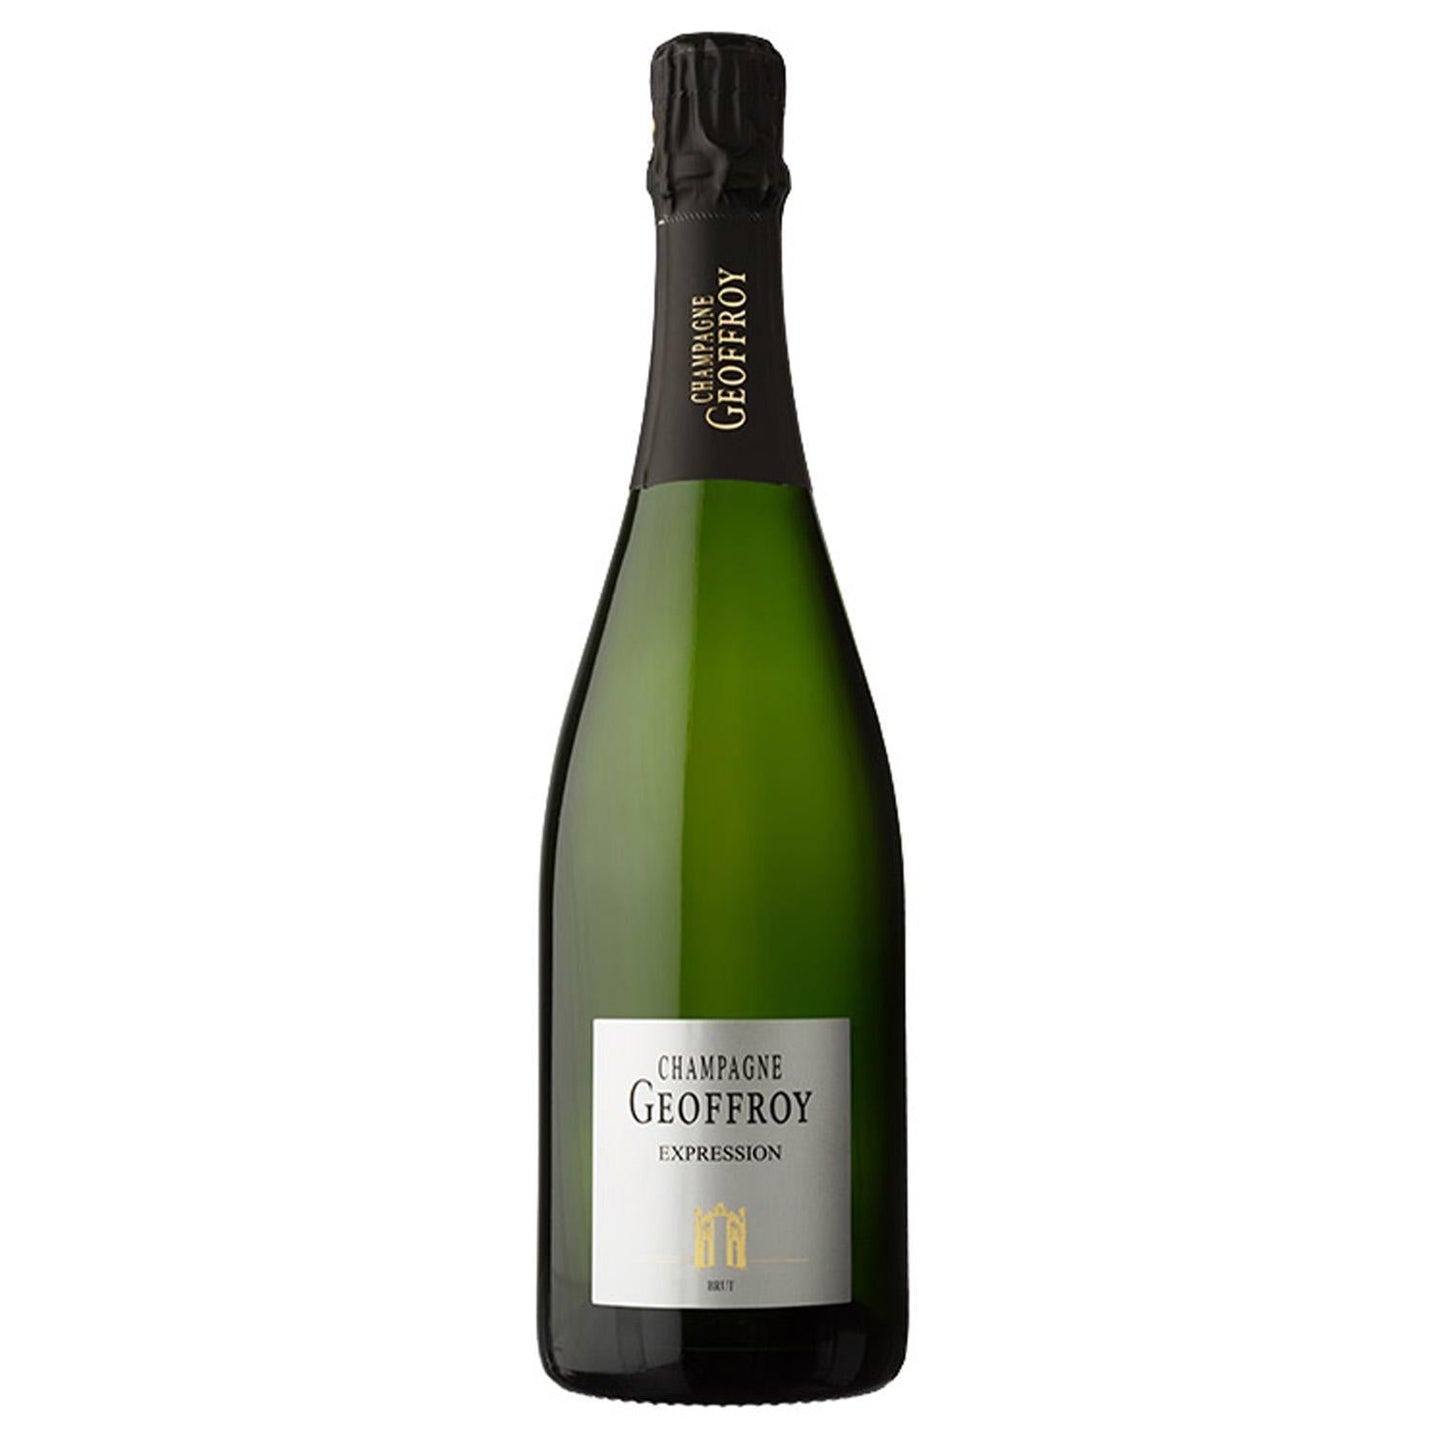 Champagne Geoffrey Expression - The Epicurean Trader